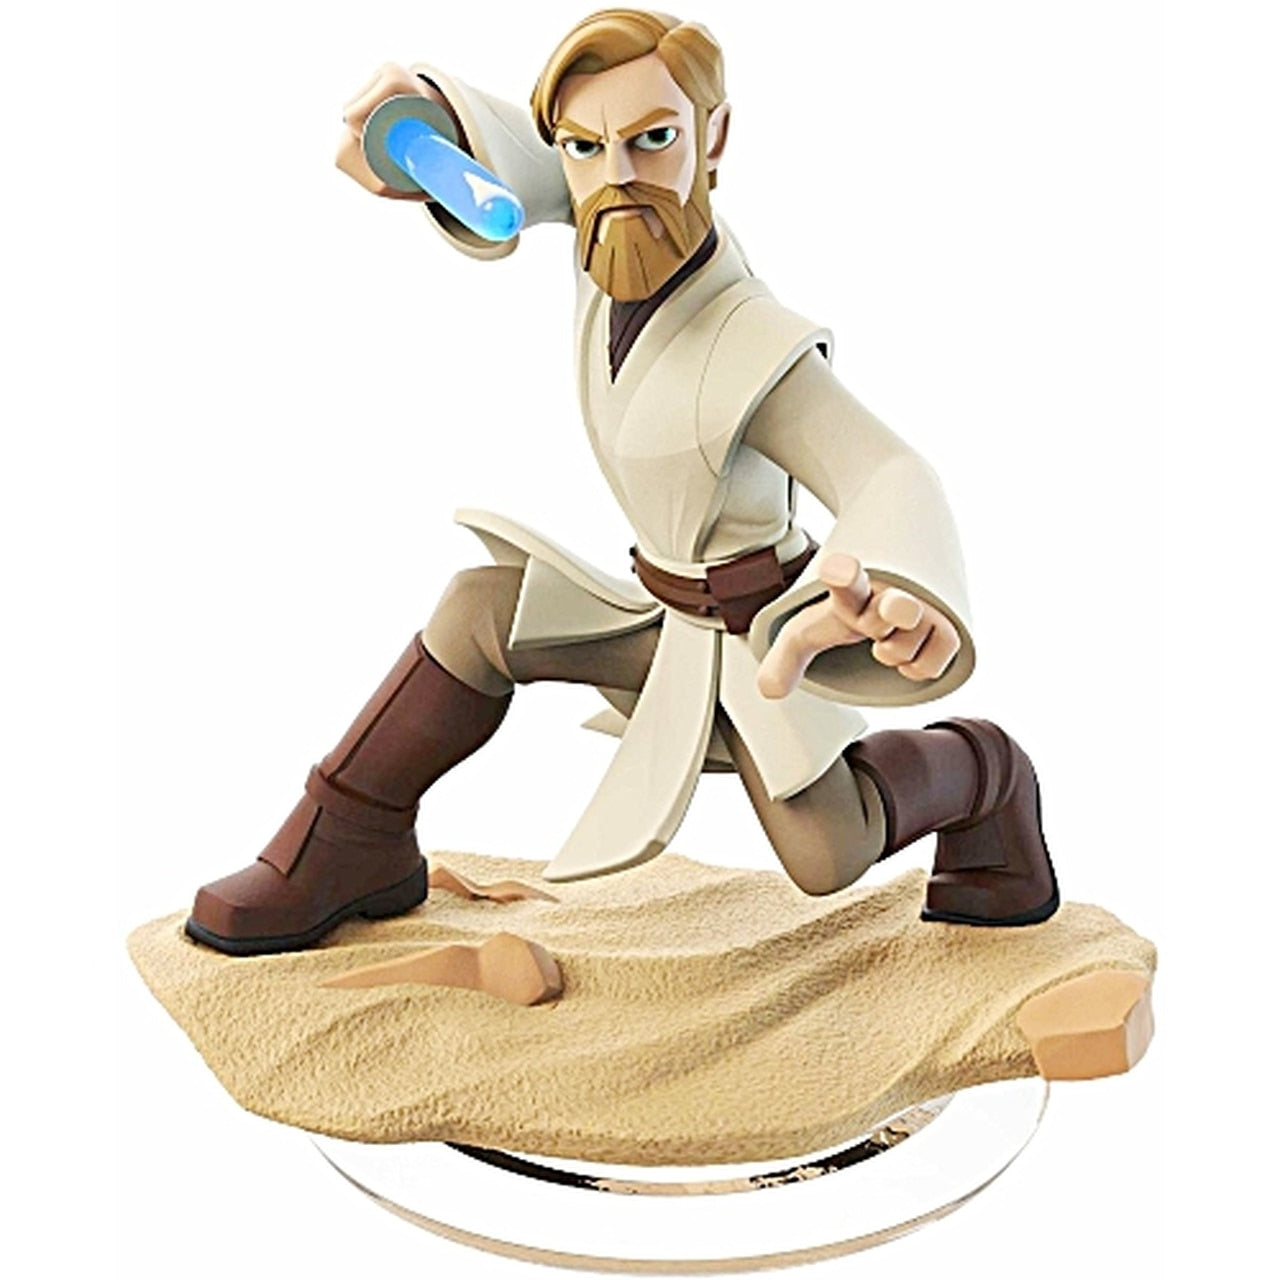 Disney Infinity 3.0 Edition - Star Wars Obi-Wan Kenobi Figure